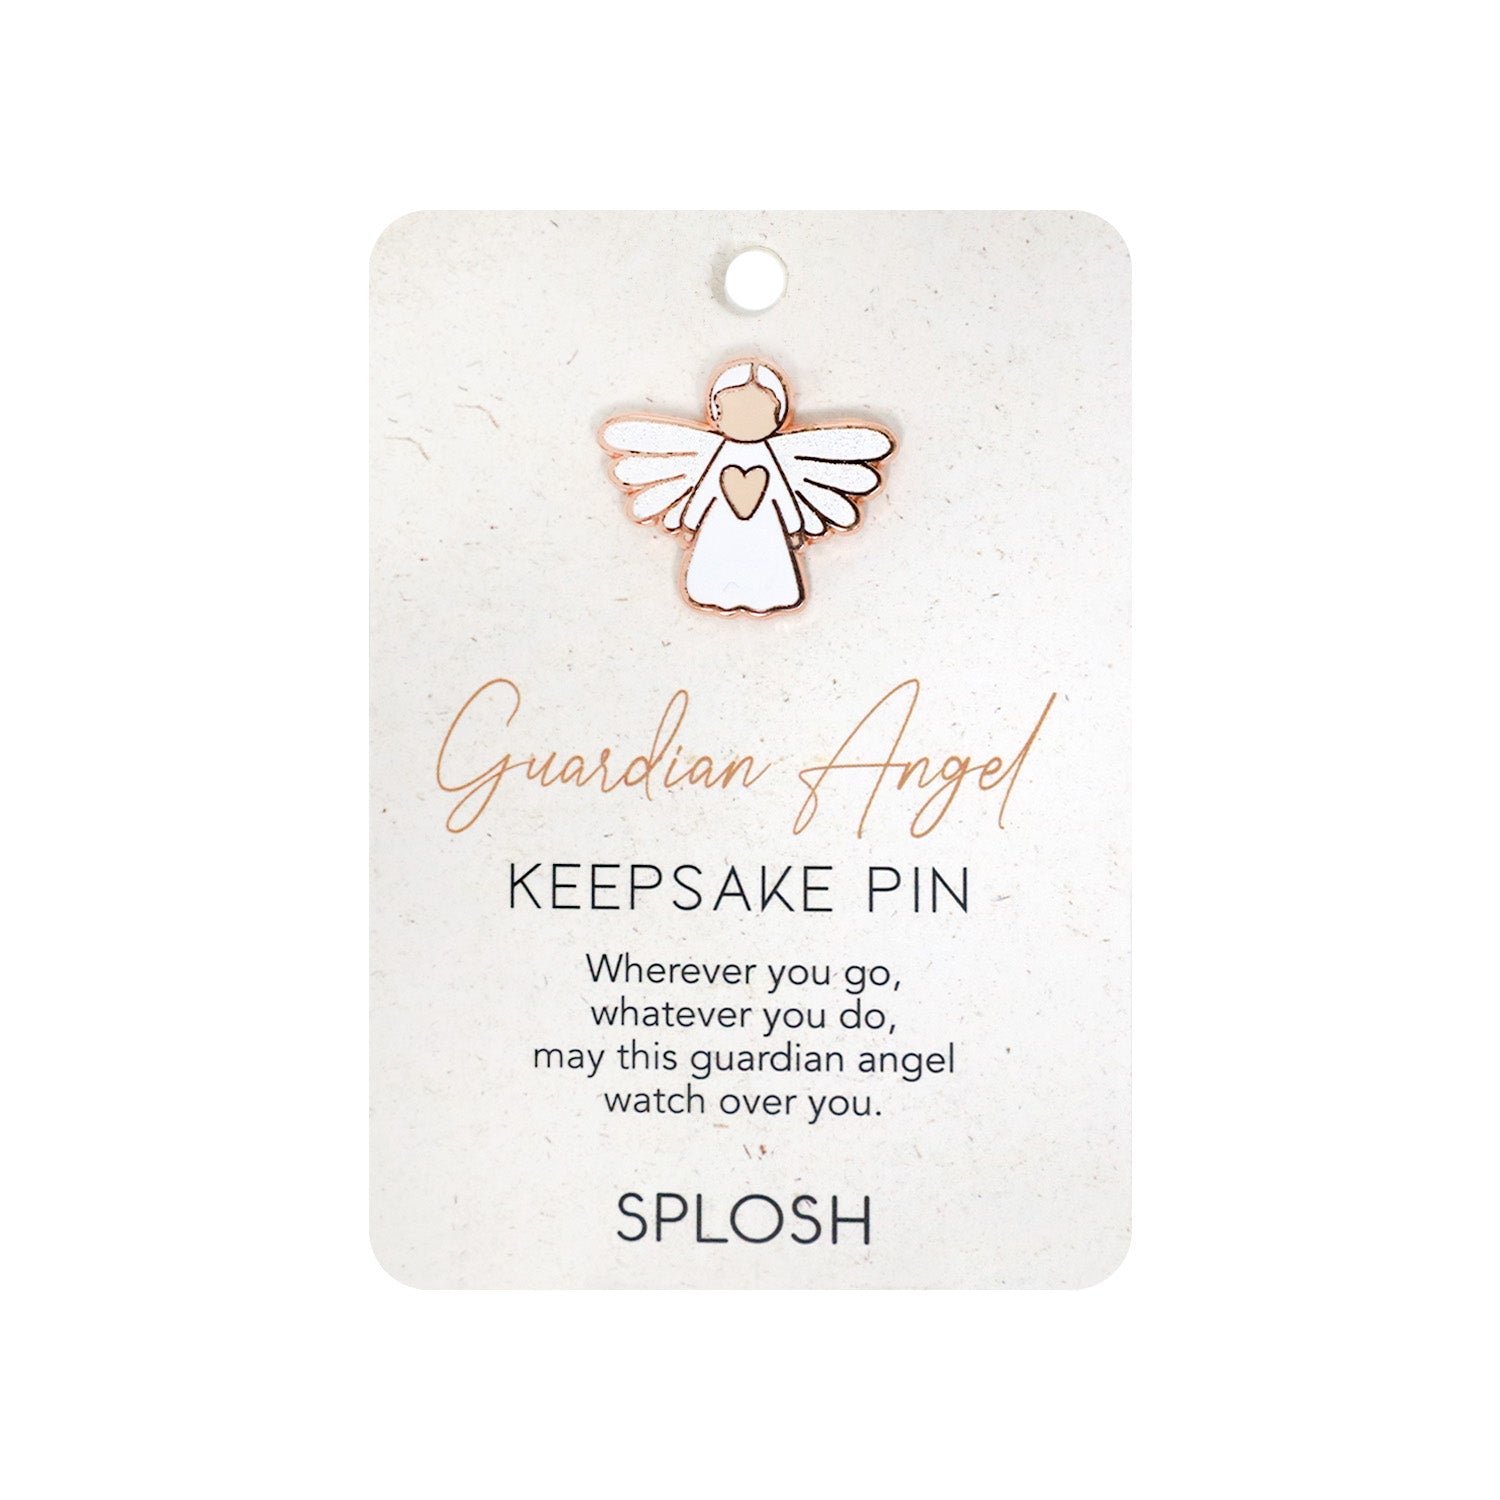 Splosh Guardian Angel Keepsake Pin